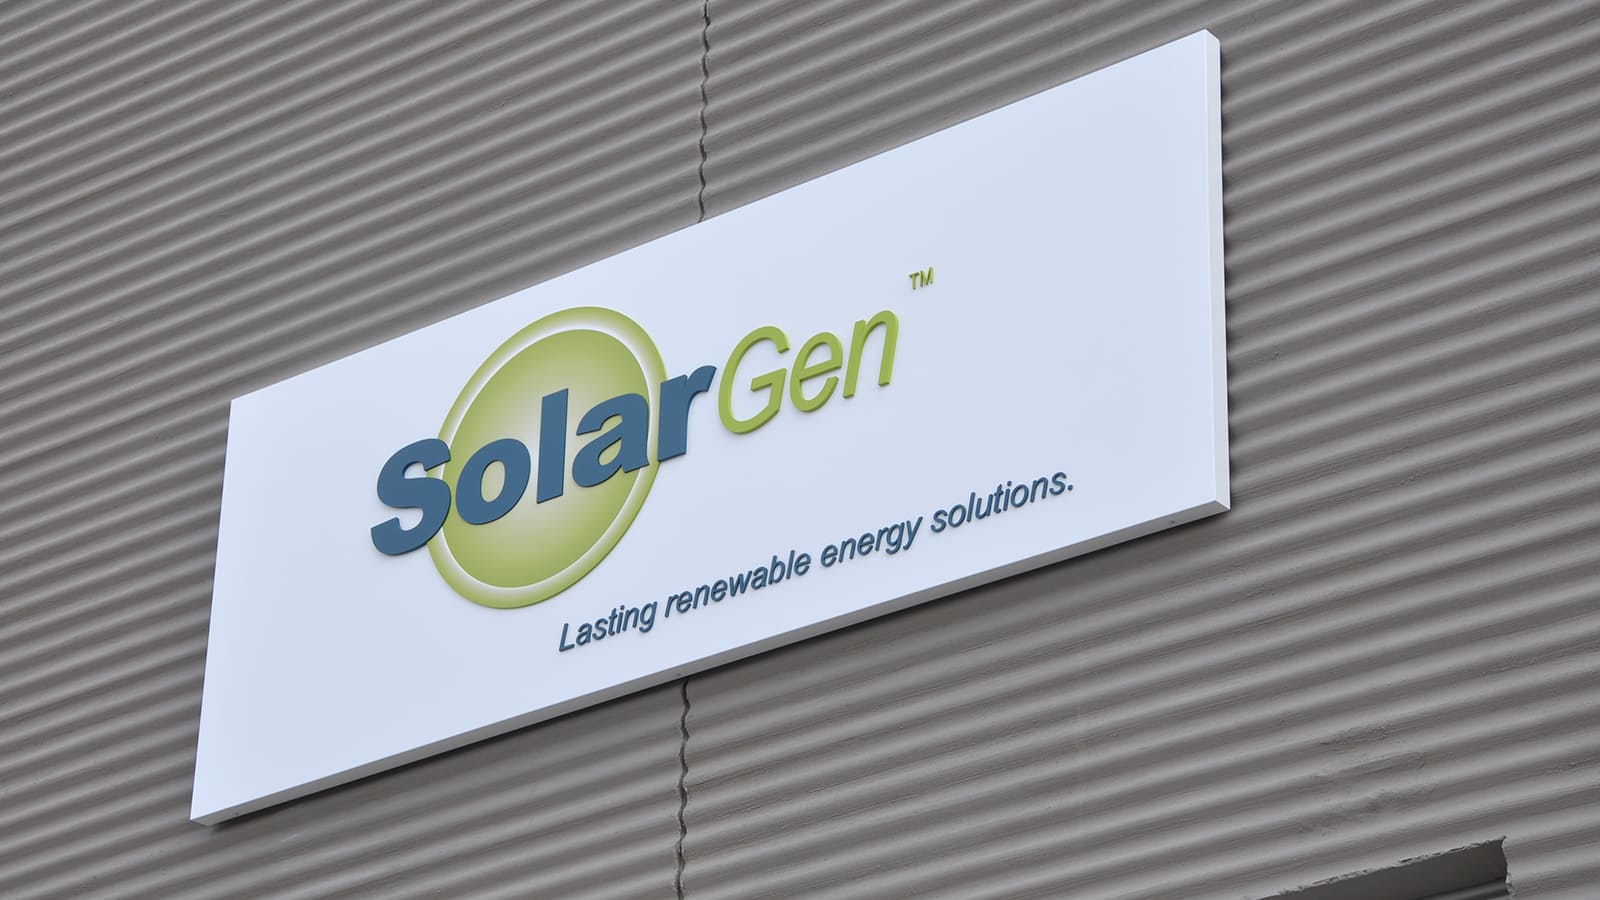 panel-solar-gen